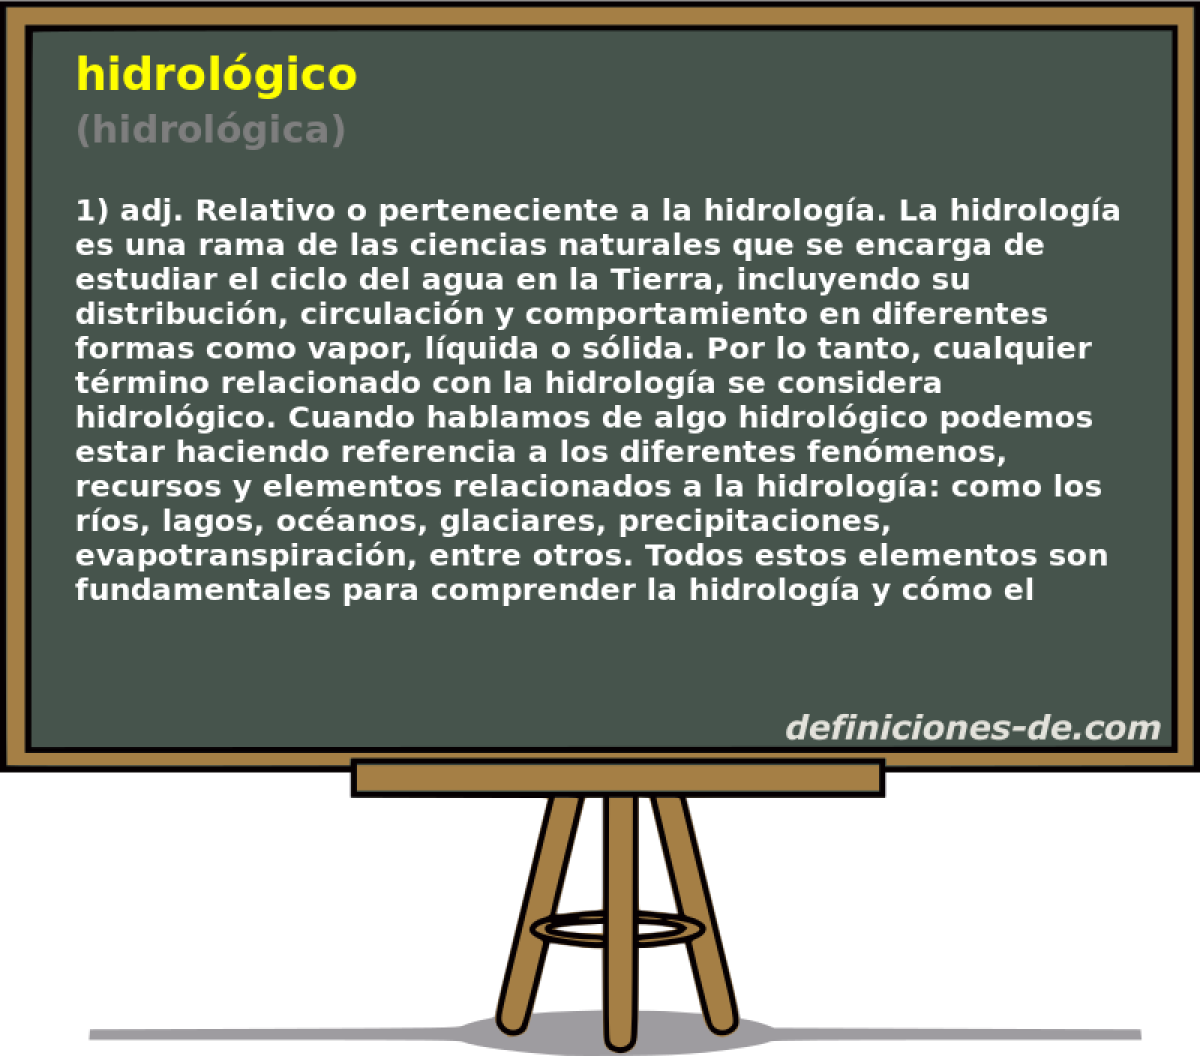 hidrolgico (hidrolgica)